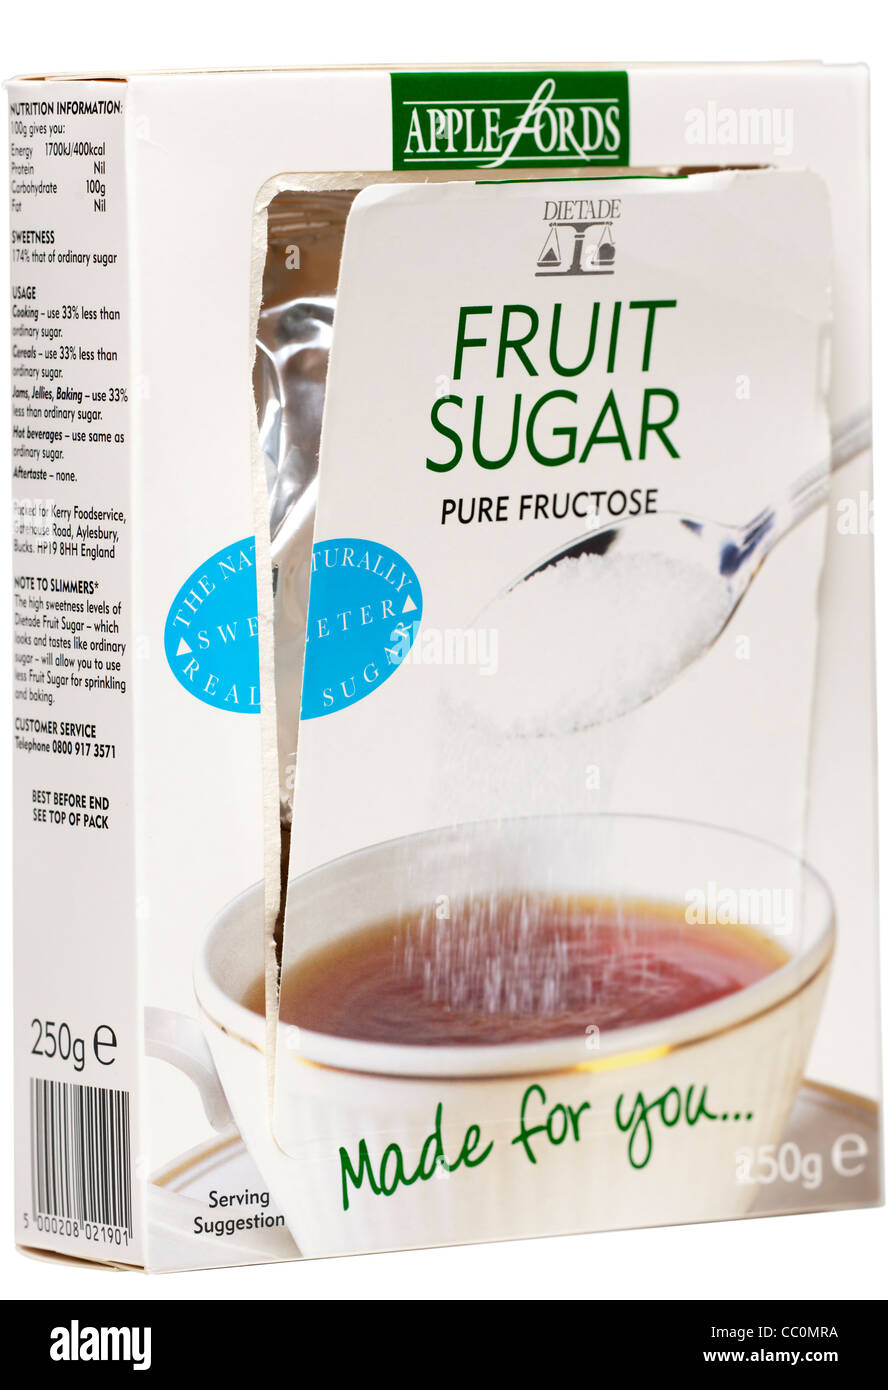 Box of Applefords pure fruit sugar fructose Stock Photo